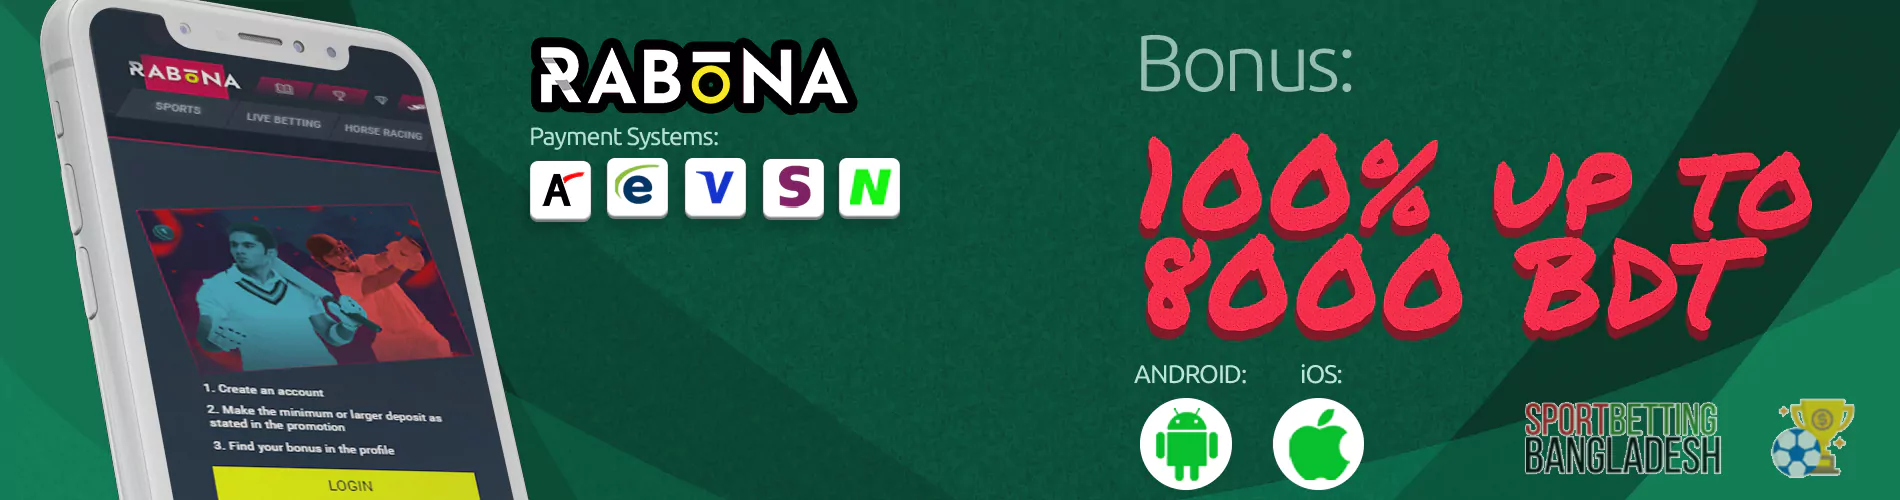 Rabona Bangladesh app: payment systems, available platforms, welcome bonus.